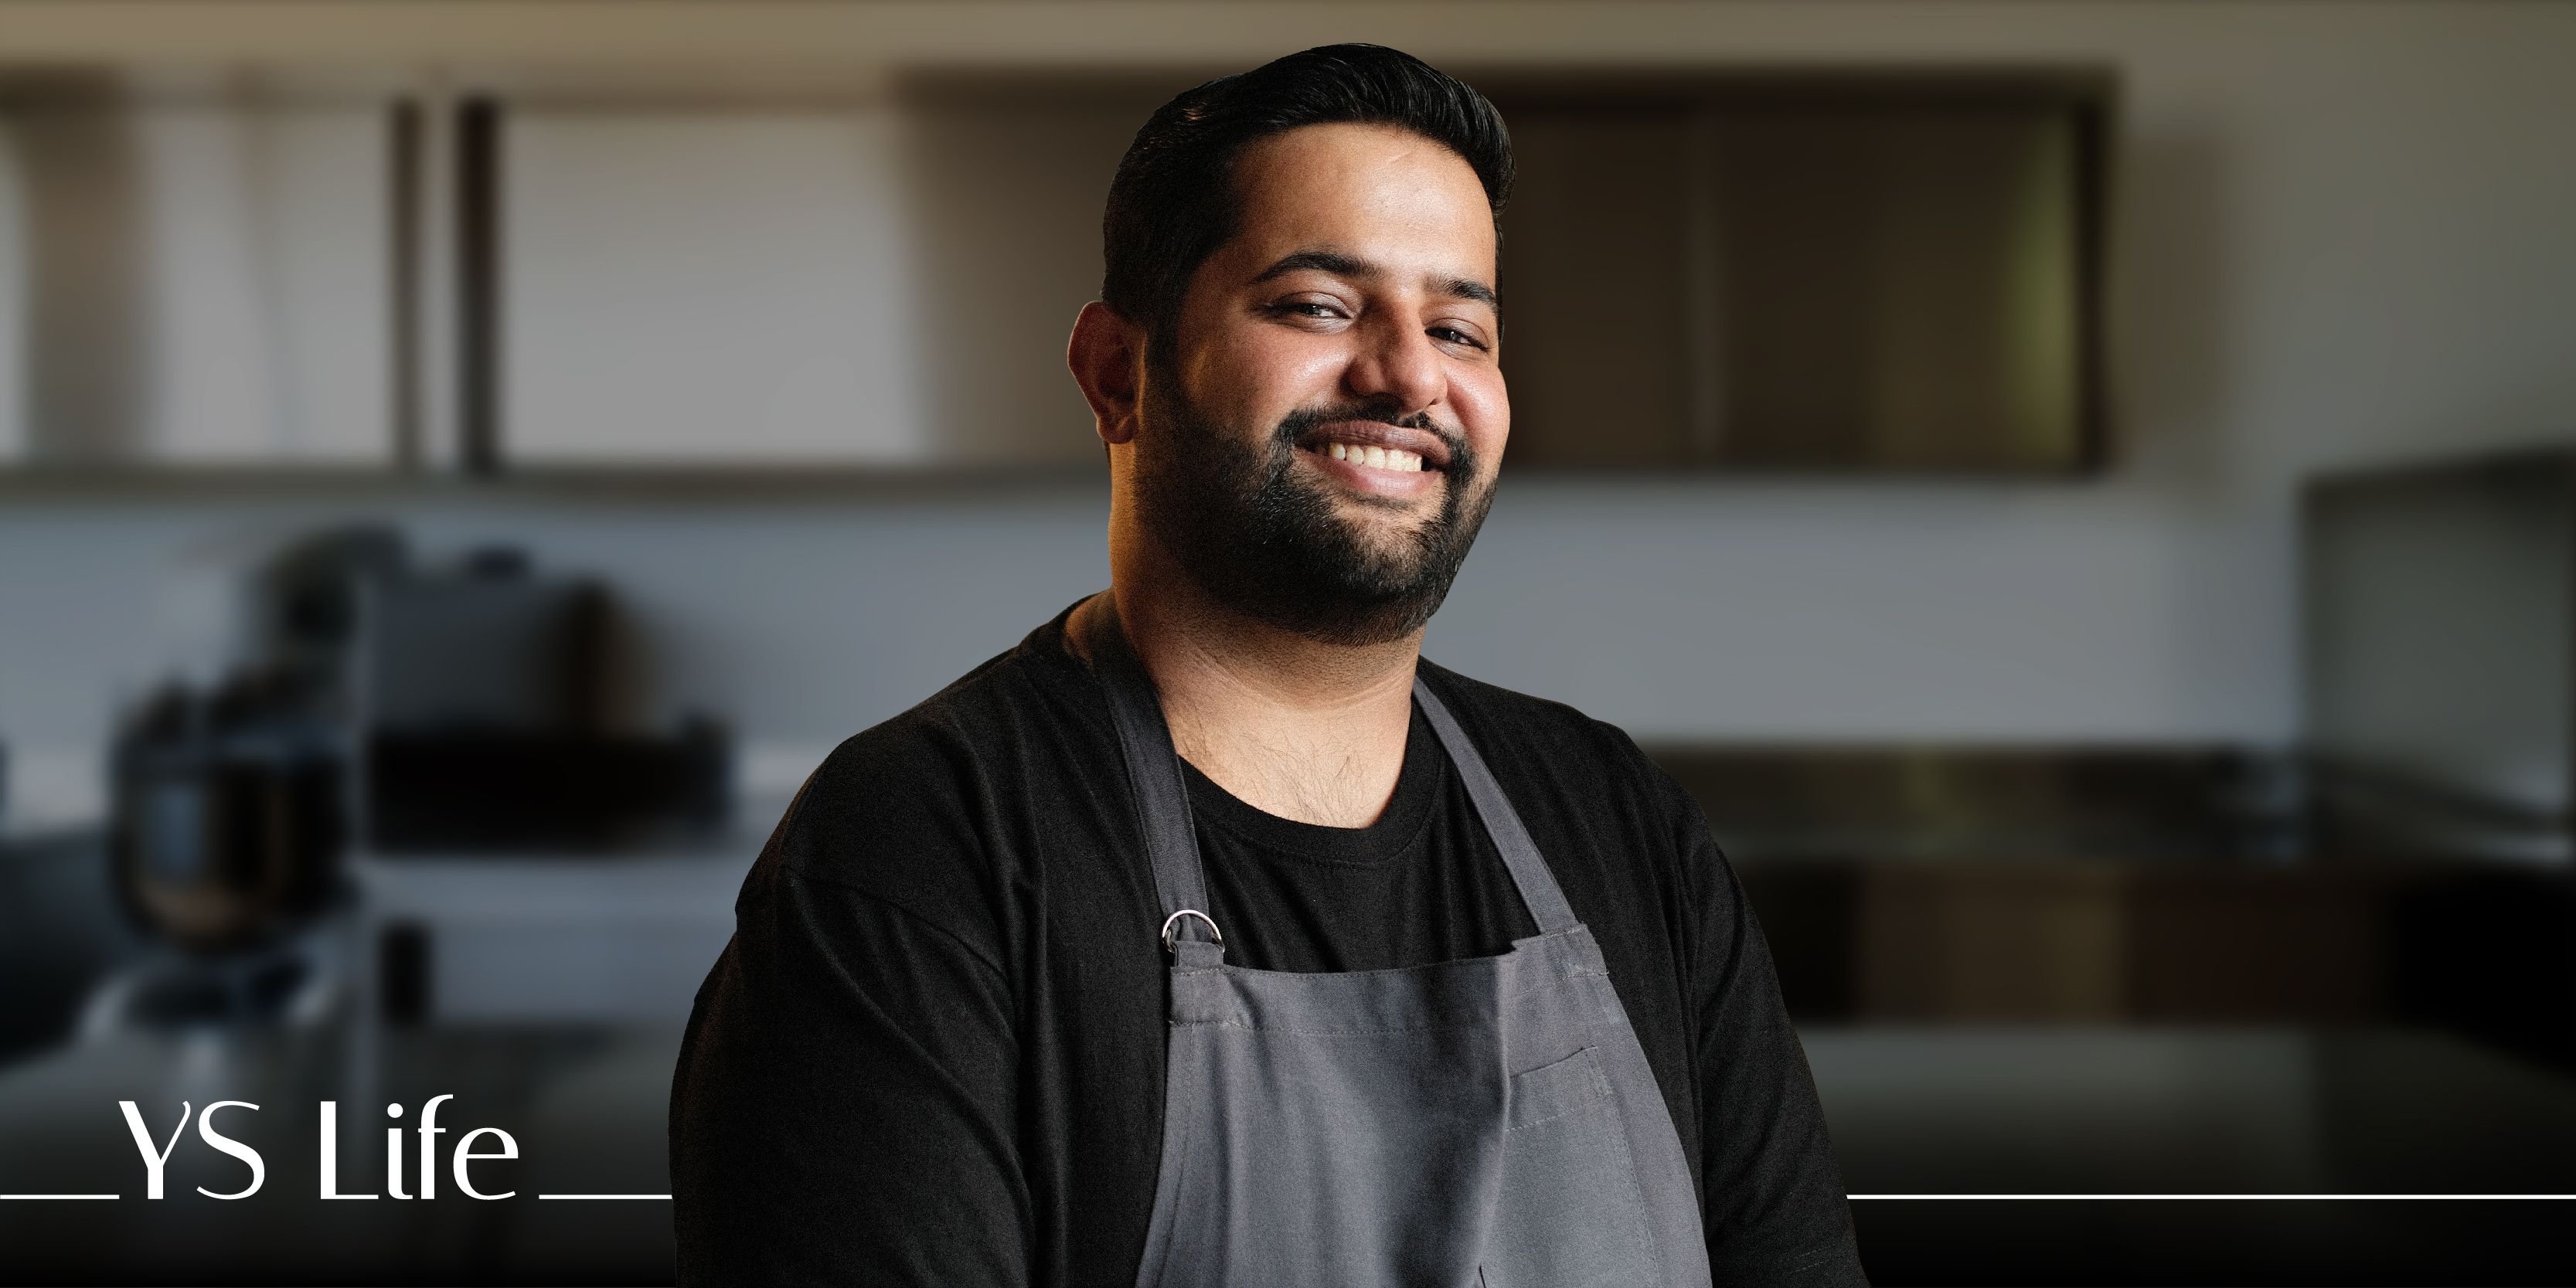 Varun Totlani: The head chef at Mumbai’s Masque reveals the secret to building an award-winning restaurant in Asia